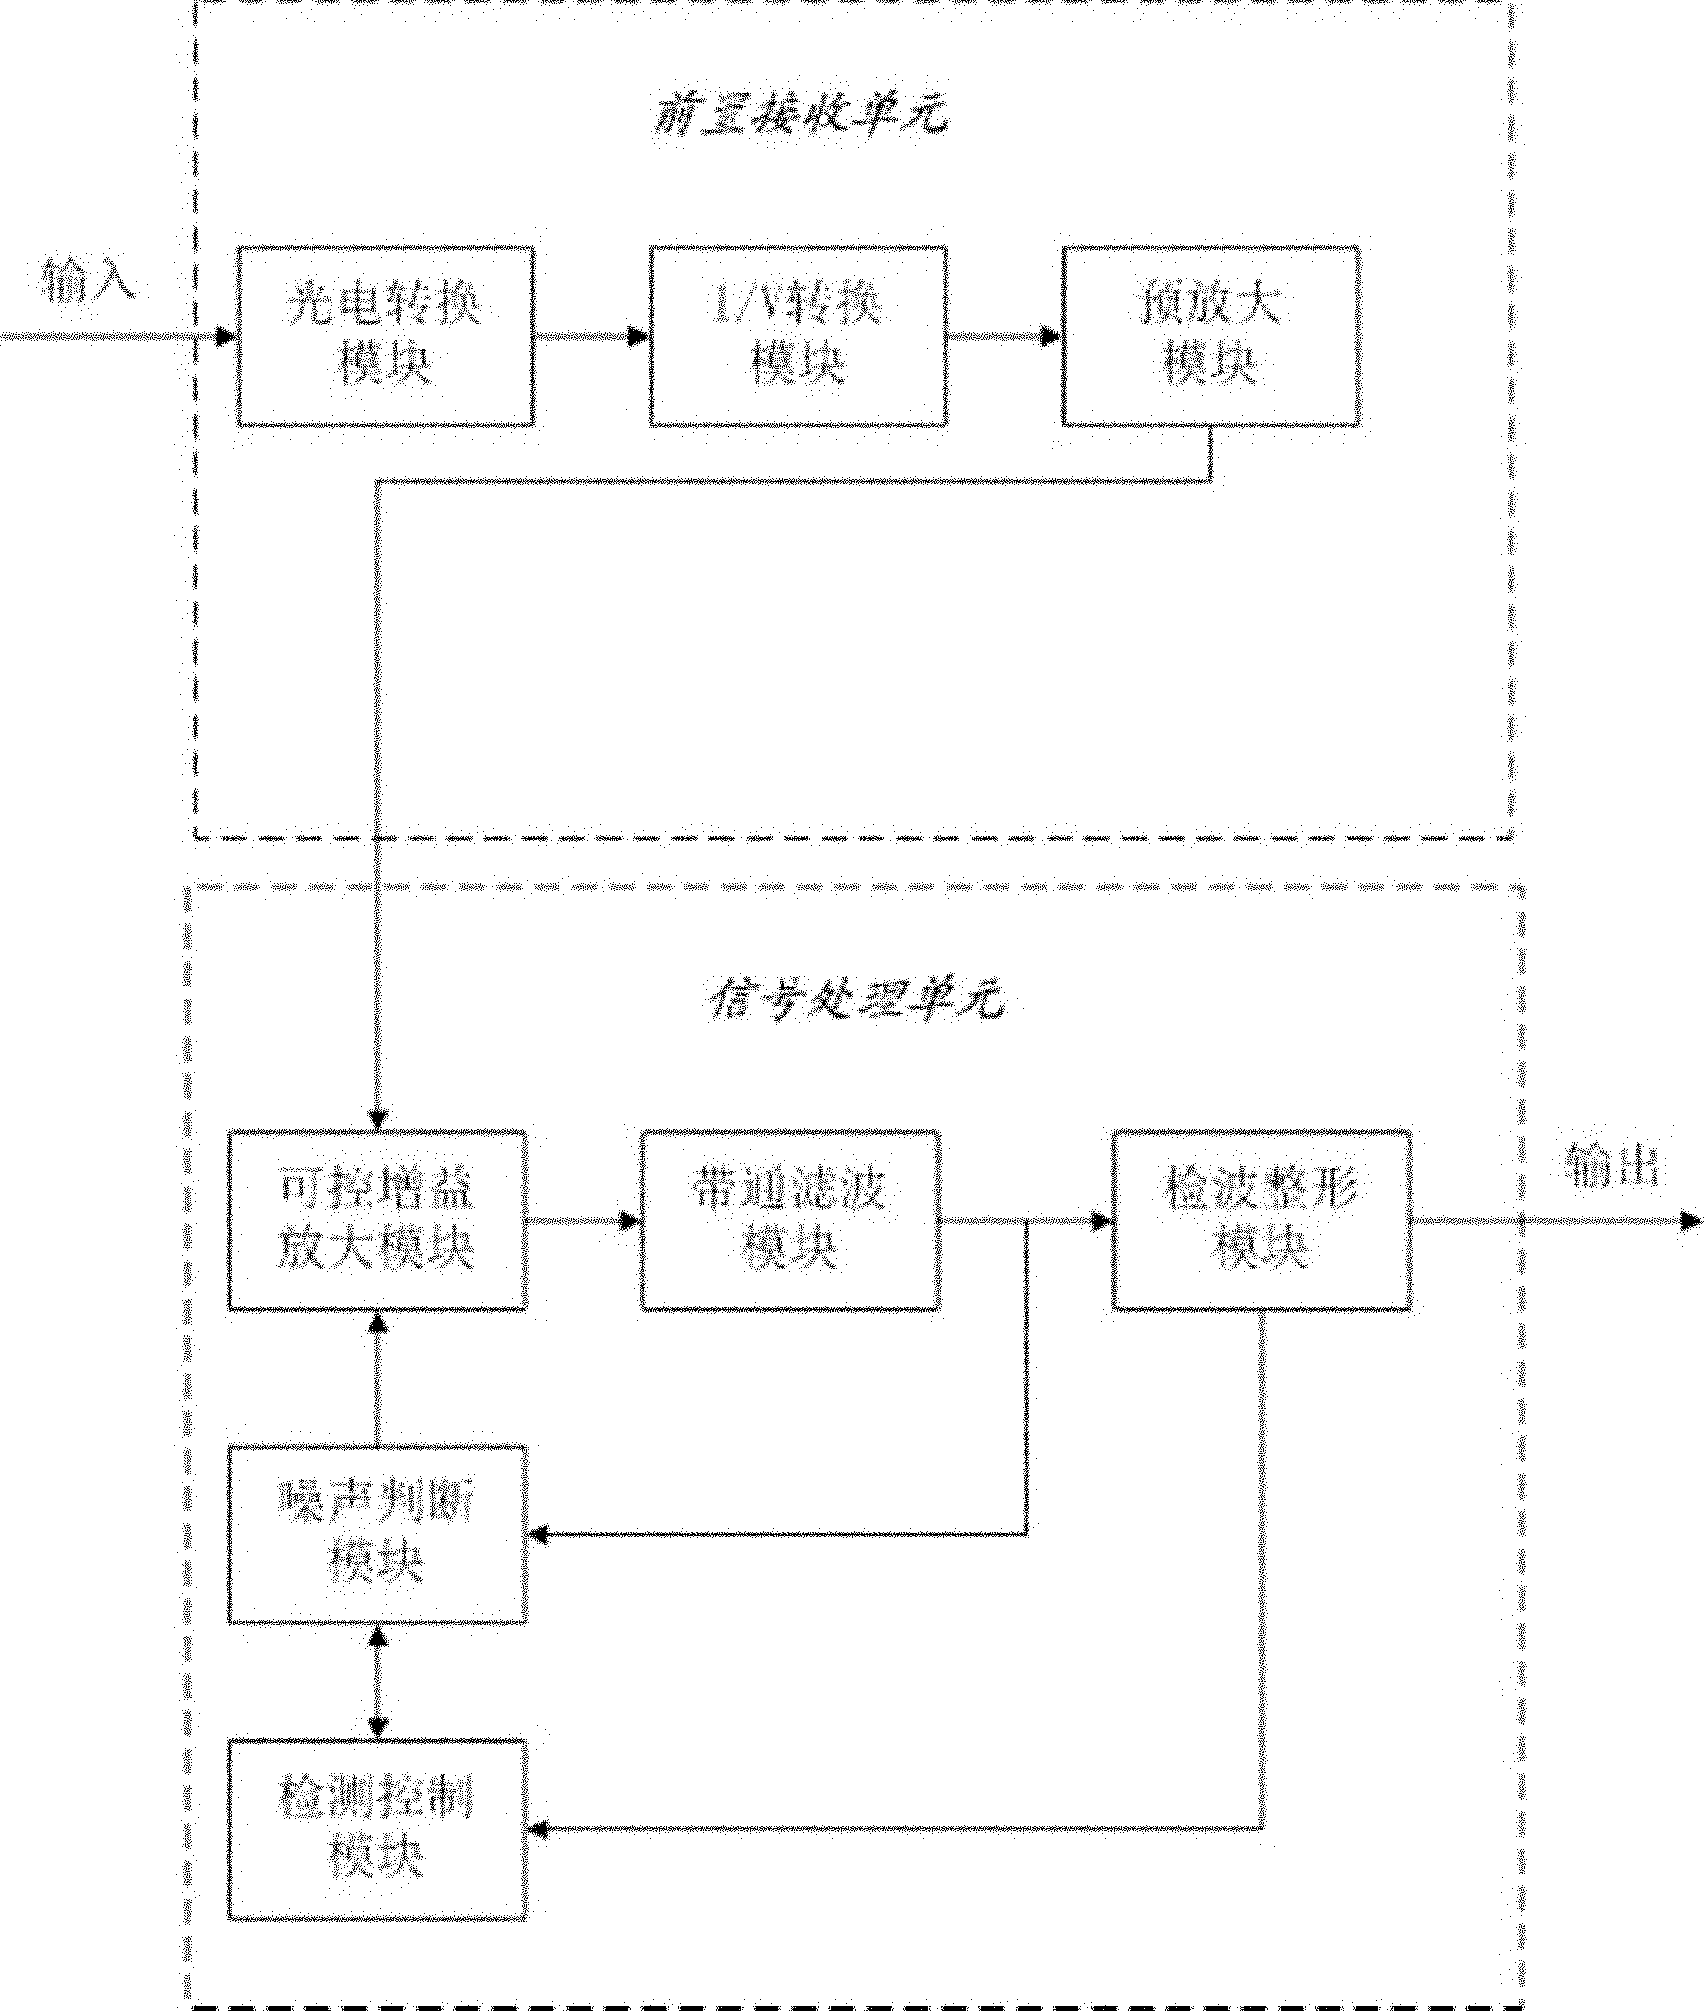 Infrared receiving circuit